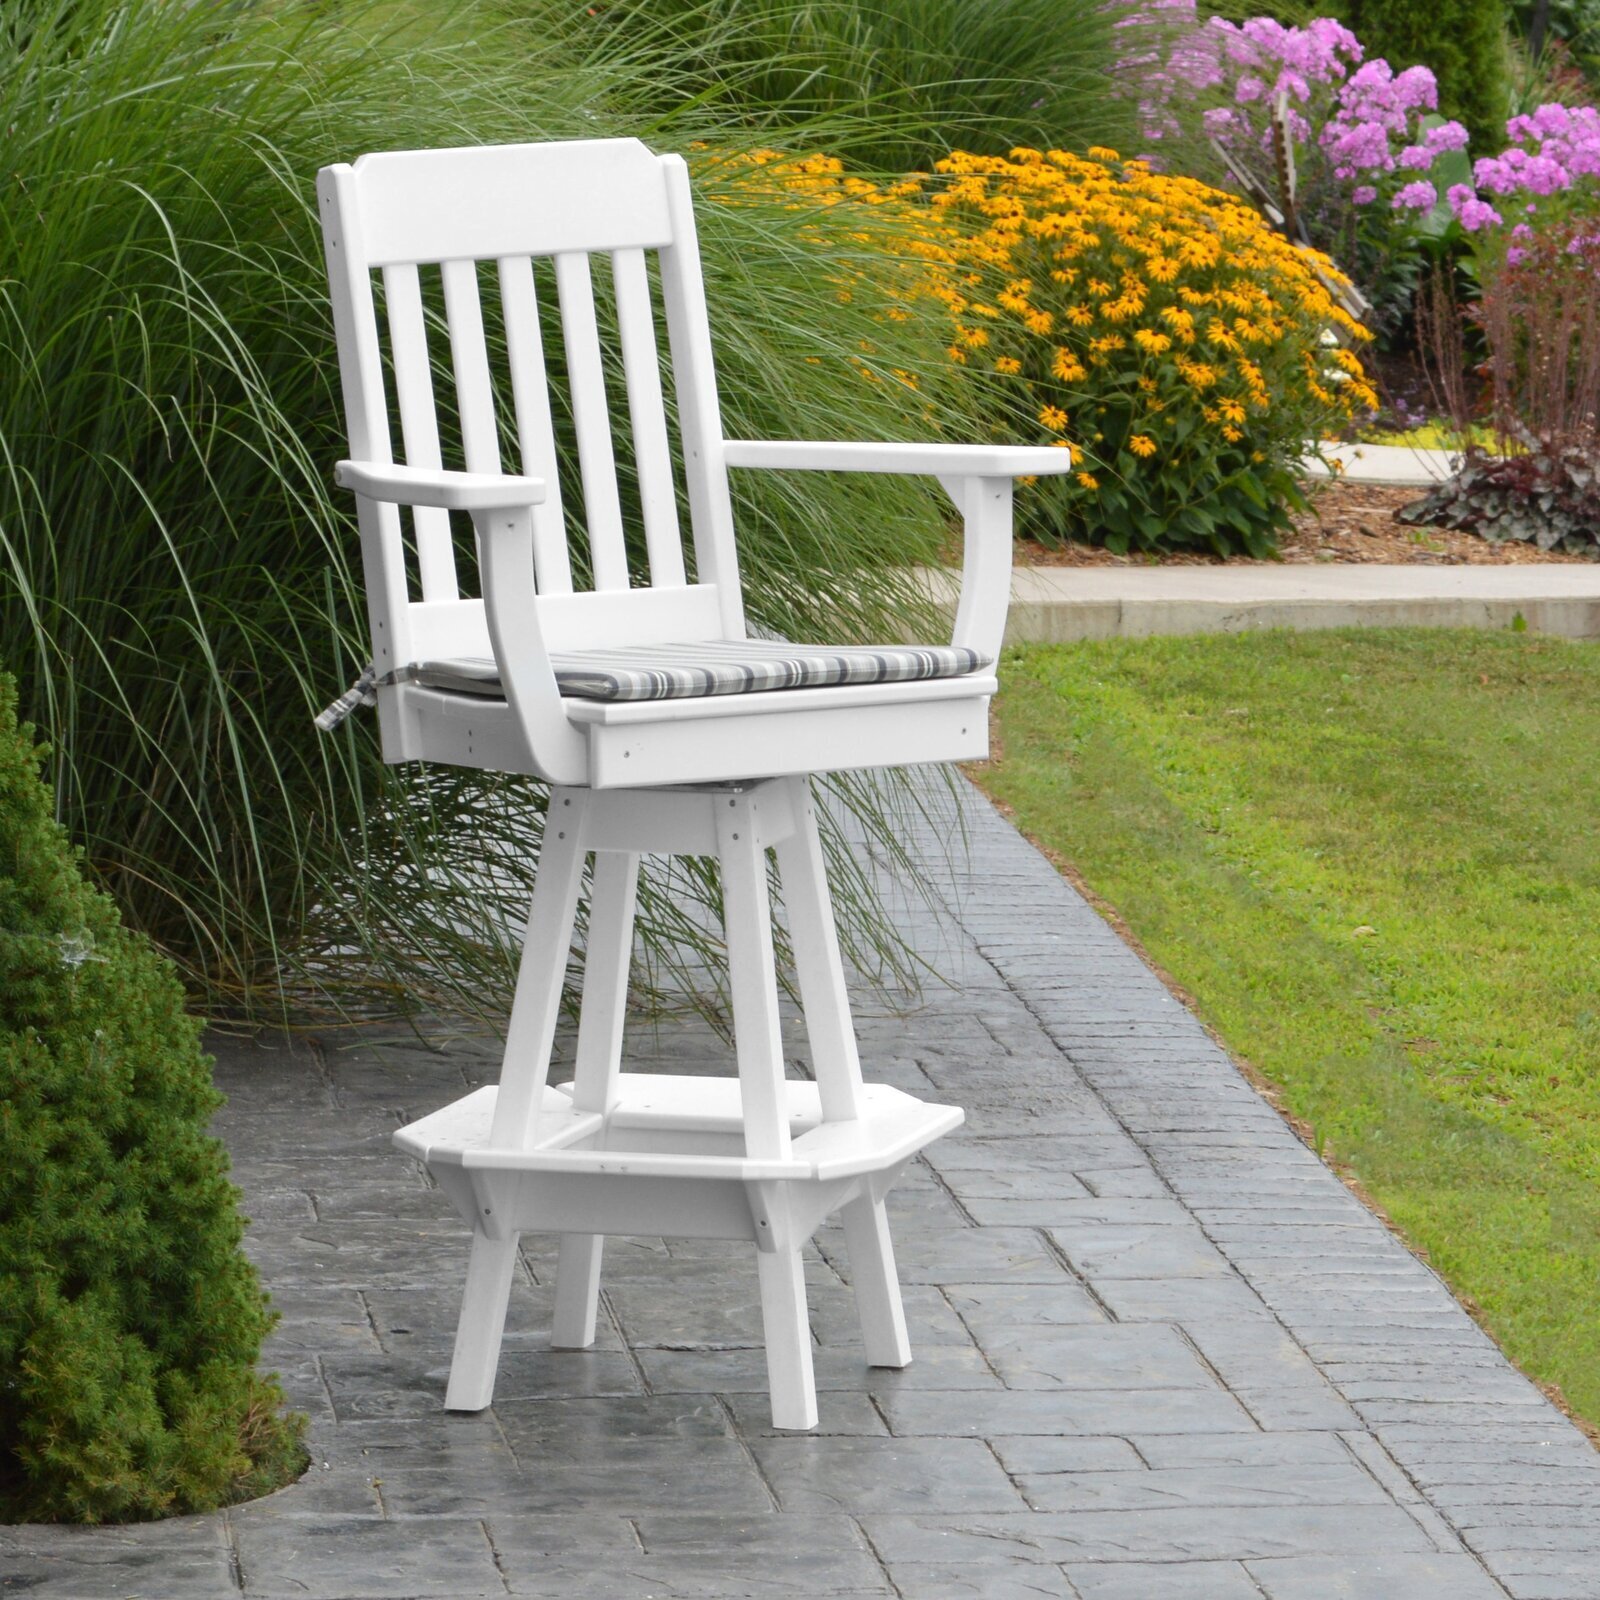 Plastic patio bar stool that swivels